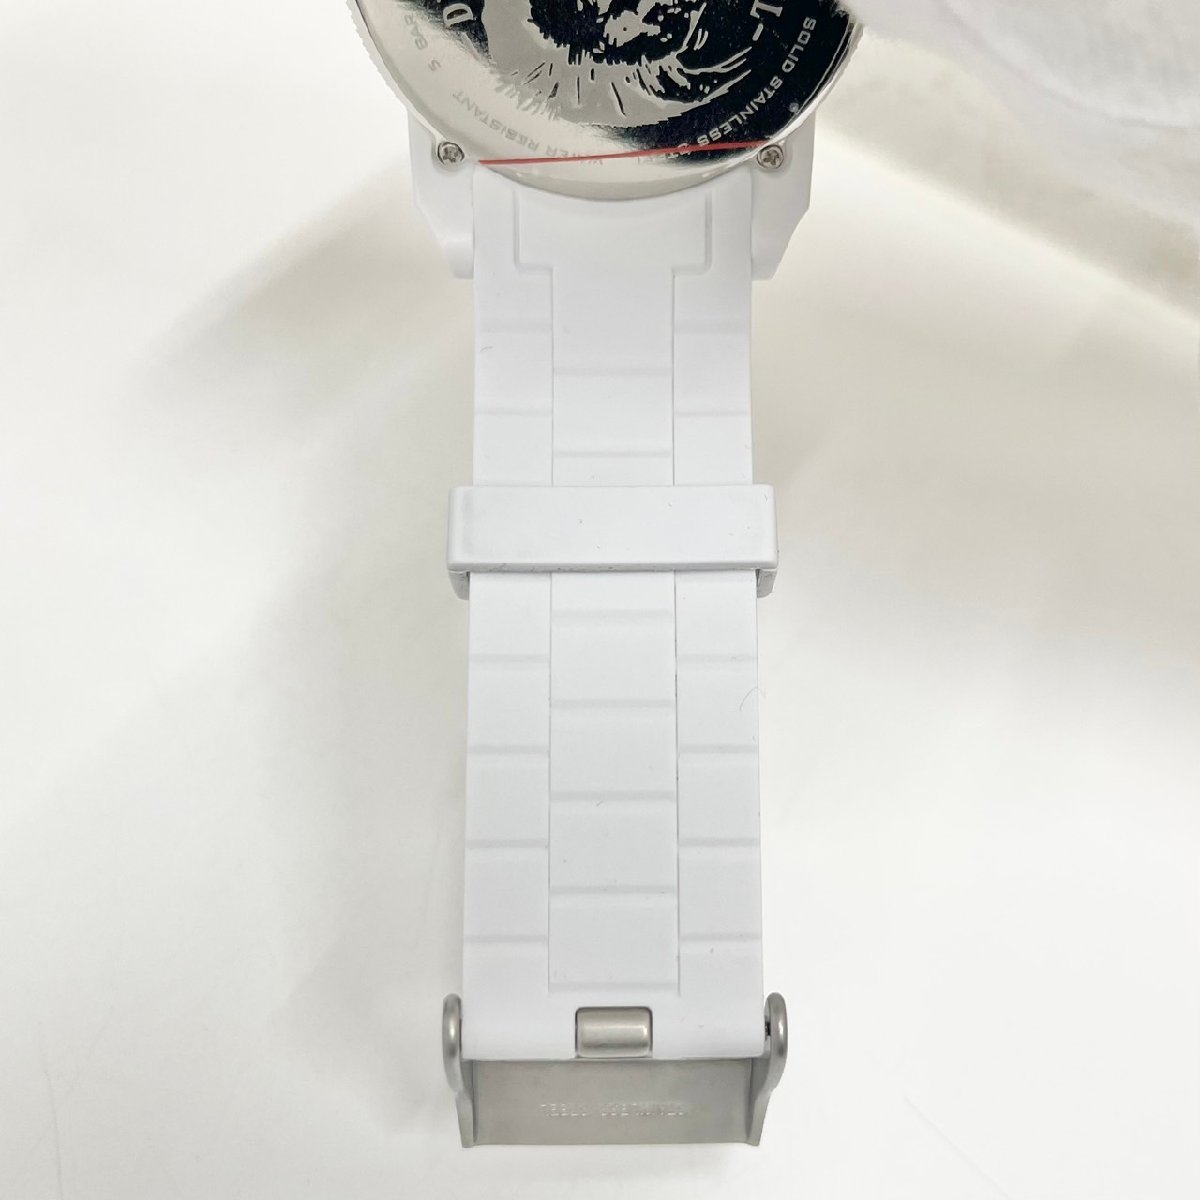 DIESEL ディーゼル 腕時計 DZ-1436 未使用 ホワイト 白 動作確認済み アナログ クォーツ 3針 電池式 白文字盤 メンズ 男性用 箱付き (I)_画像7